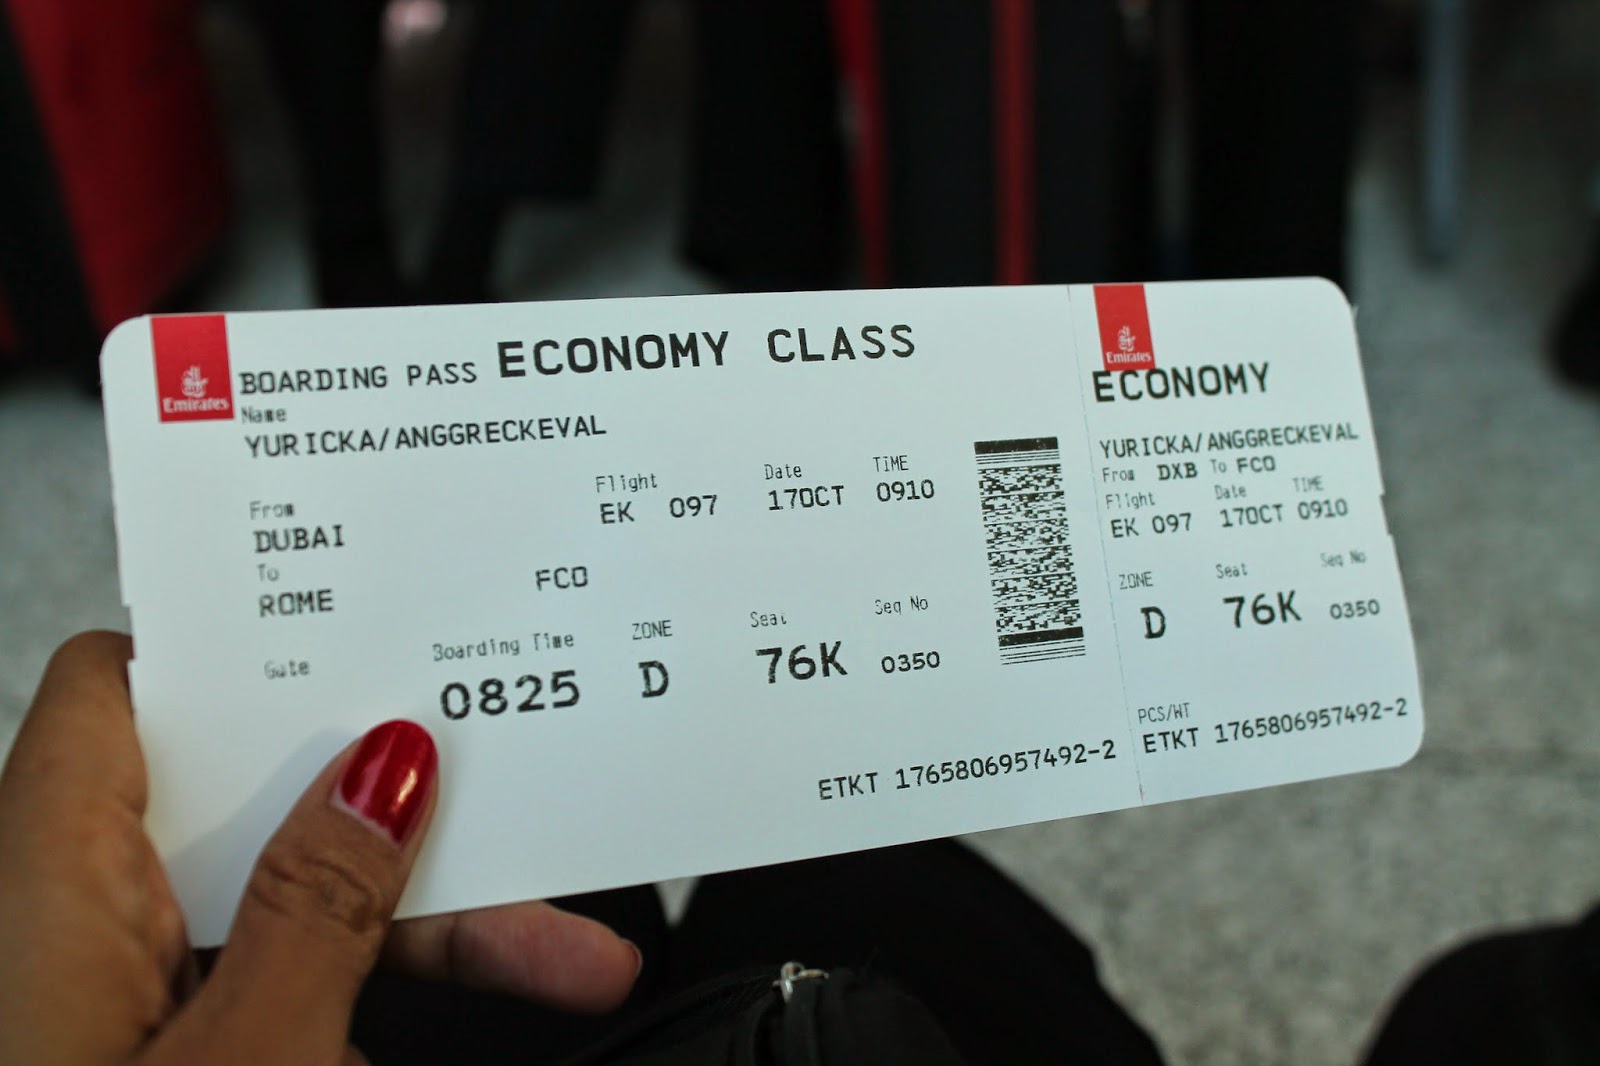 Boarding classes. Boarding Pass Maldives. One Boarding.